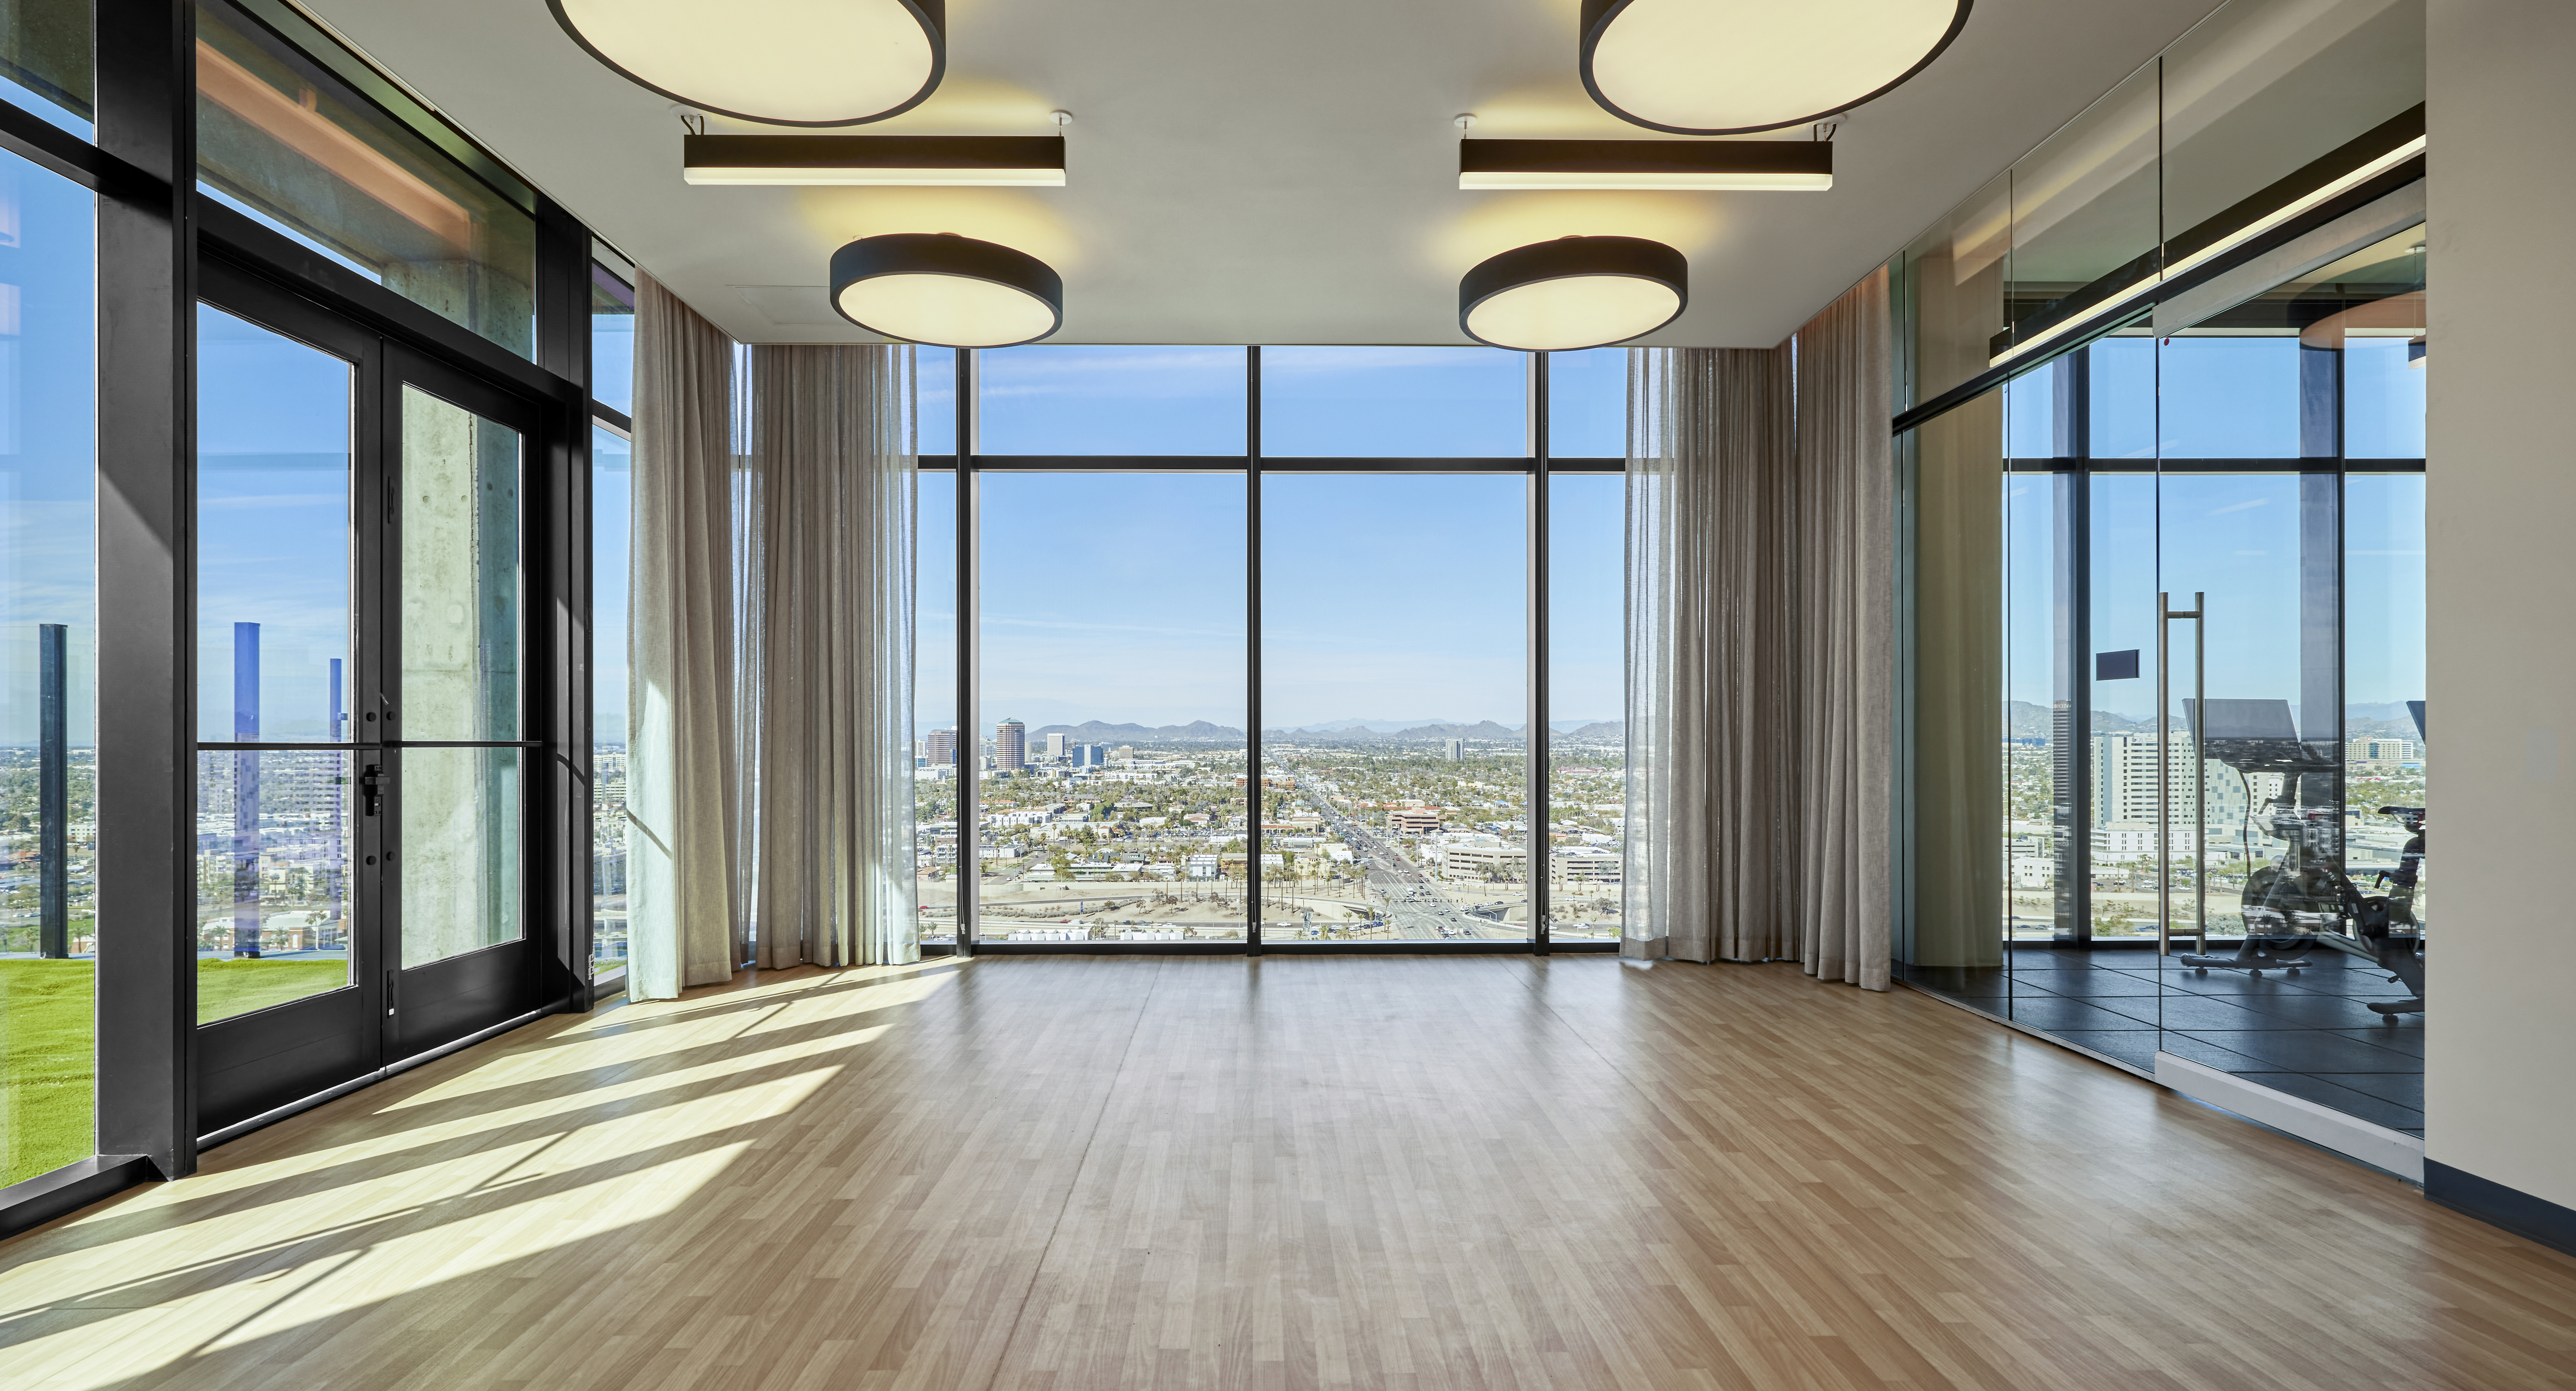 Yoga studio with floor-to-ceiling windows